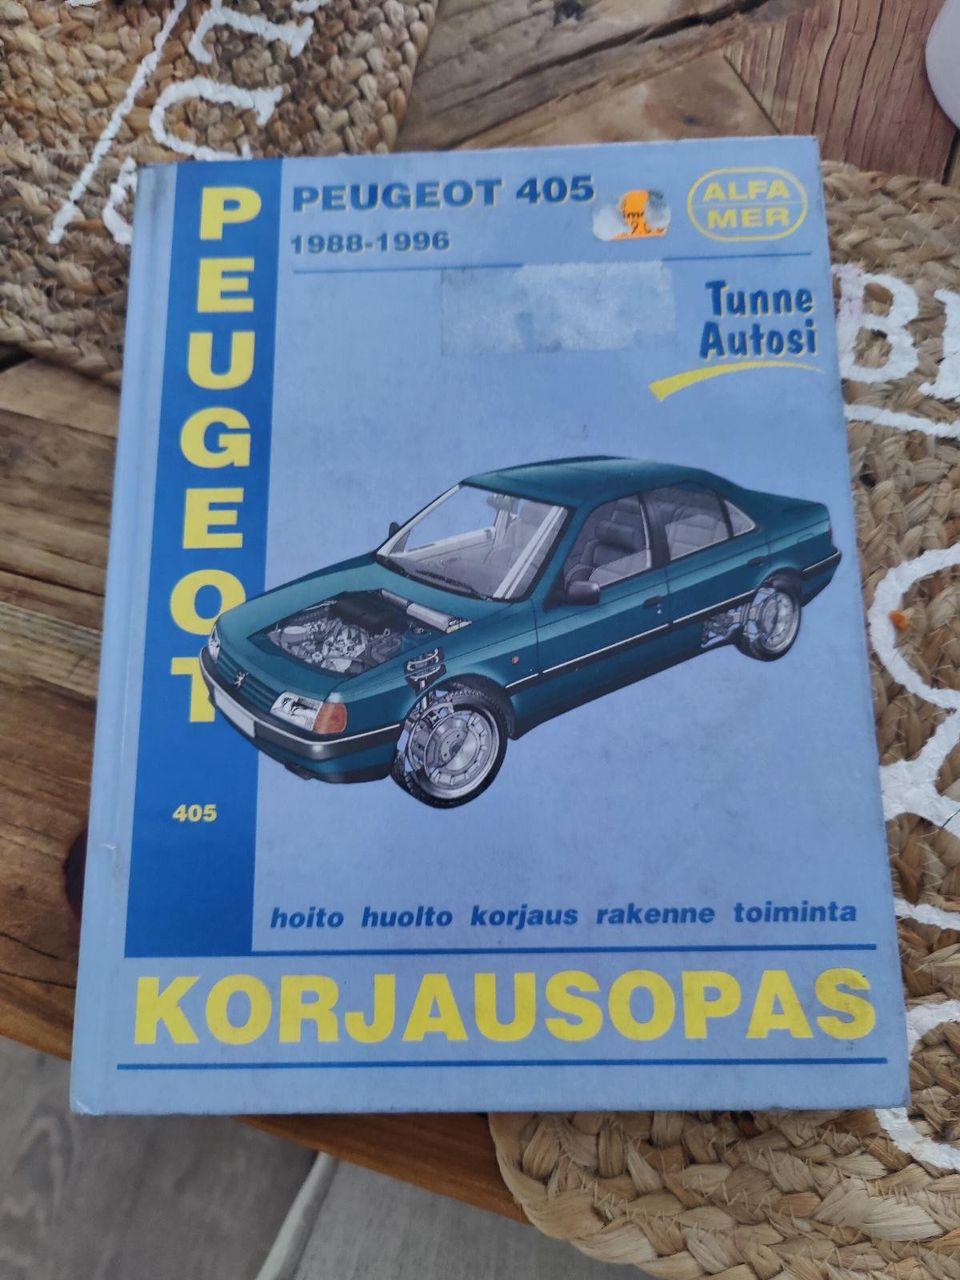 Peugeot 405 korjausopas